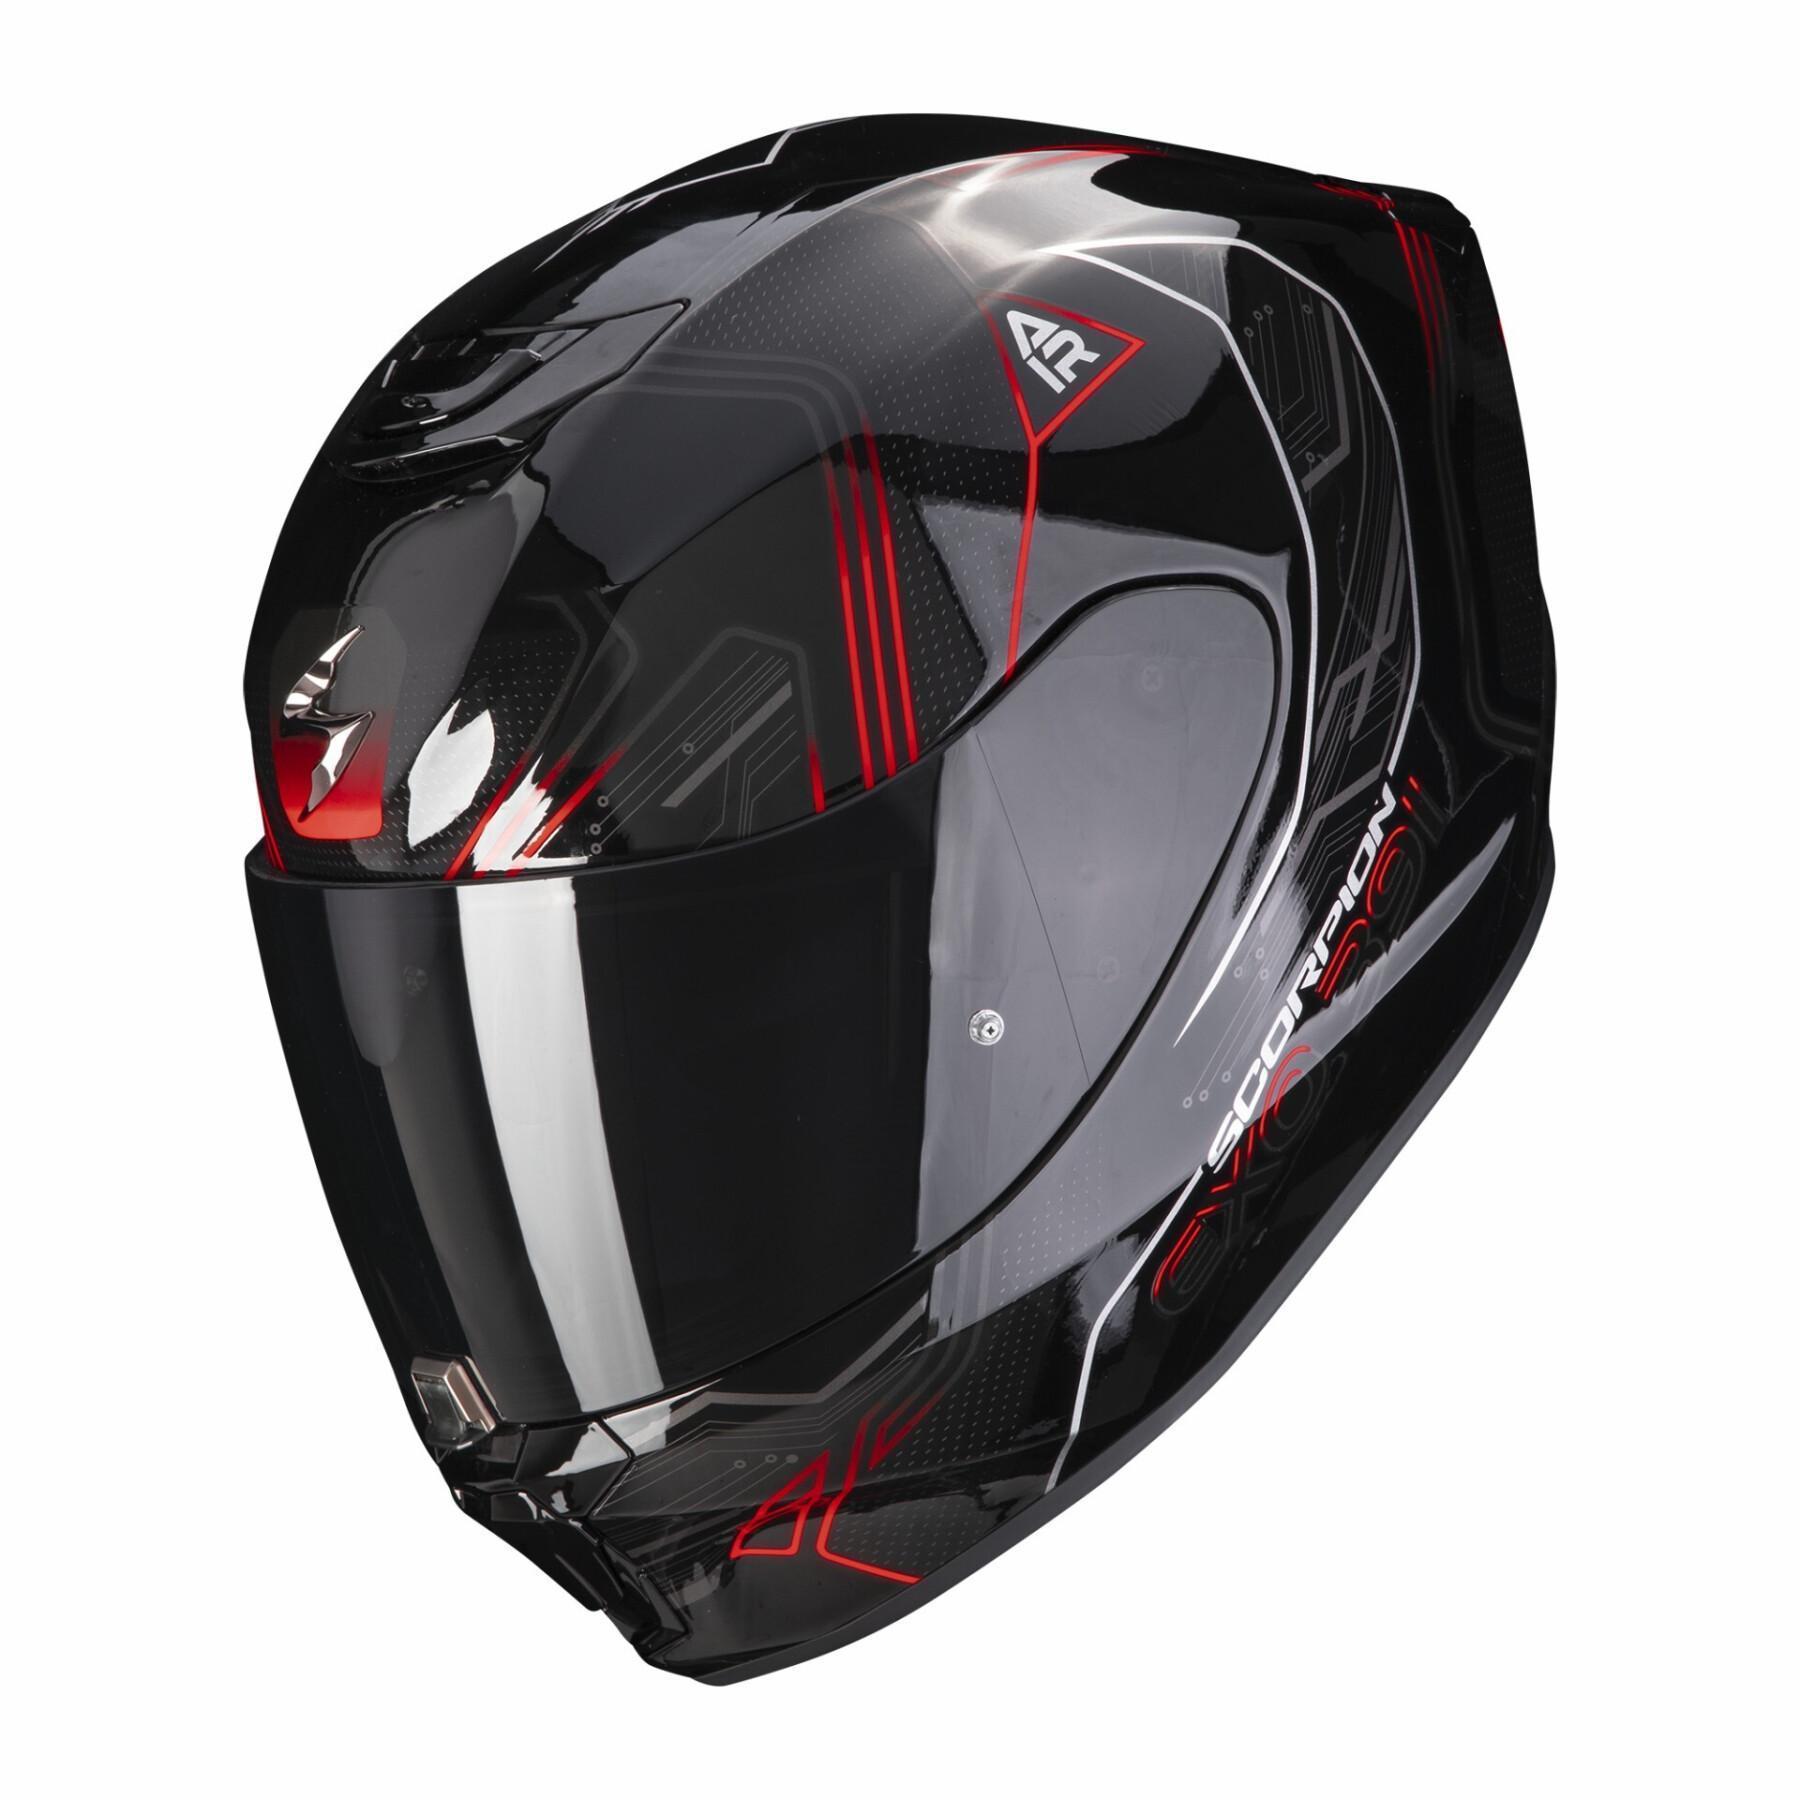 Full face motorcycle helmet Scorpion Exo-391 Spada ECE 22-06